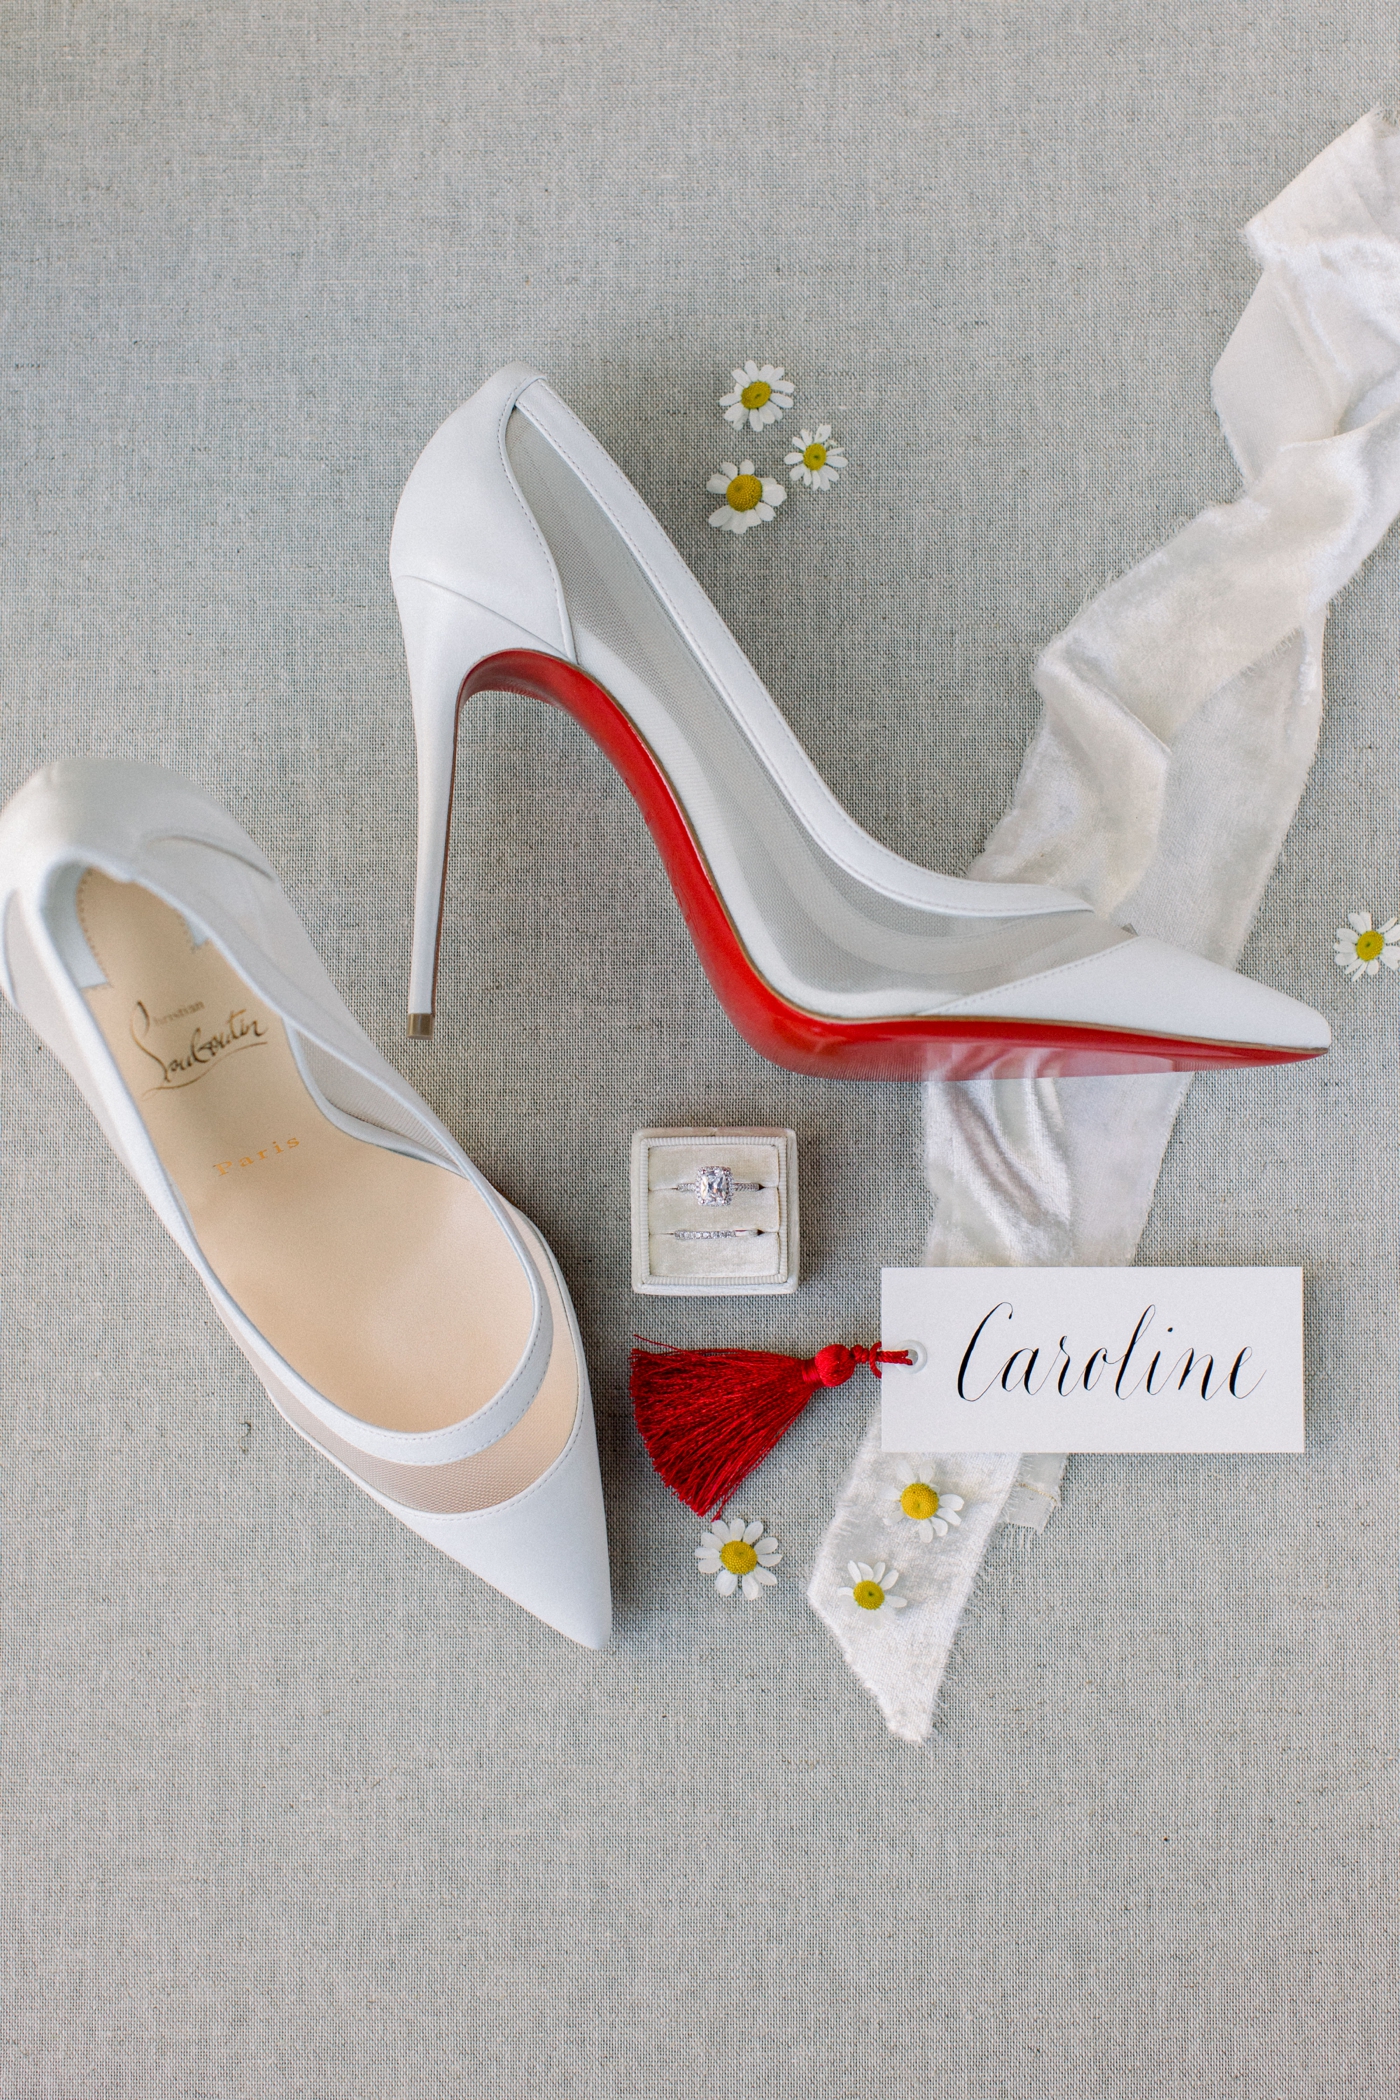 Bride in white Louboutin heels